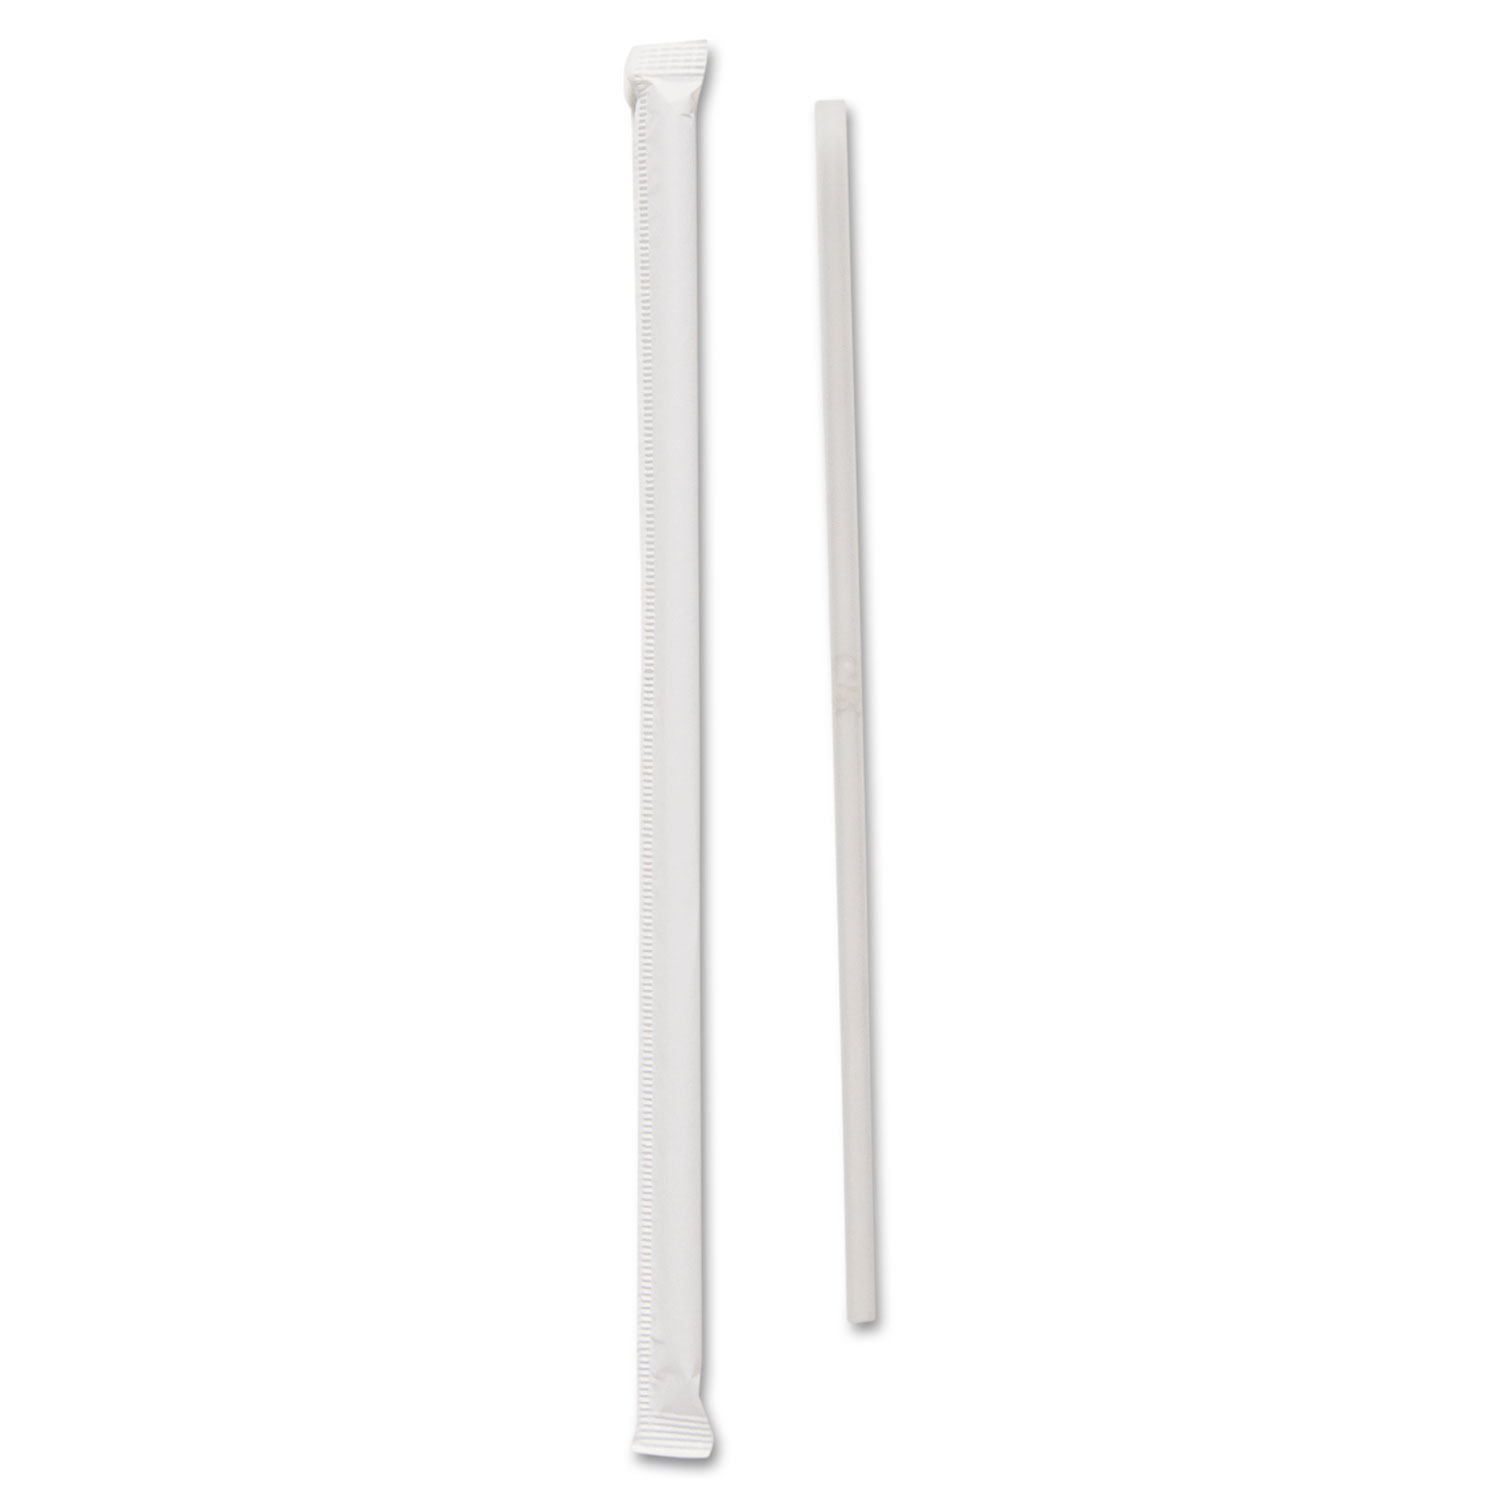  Dart 822TX-2050 Wrapped Jumbo Straws, Polypropylene, 7 3/4, Translucent, 500/Pack, 24 Pk/Ctn (SCC822TX) 